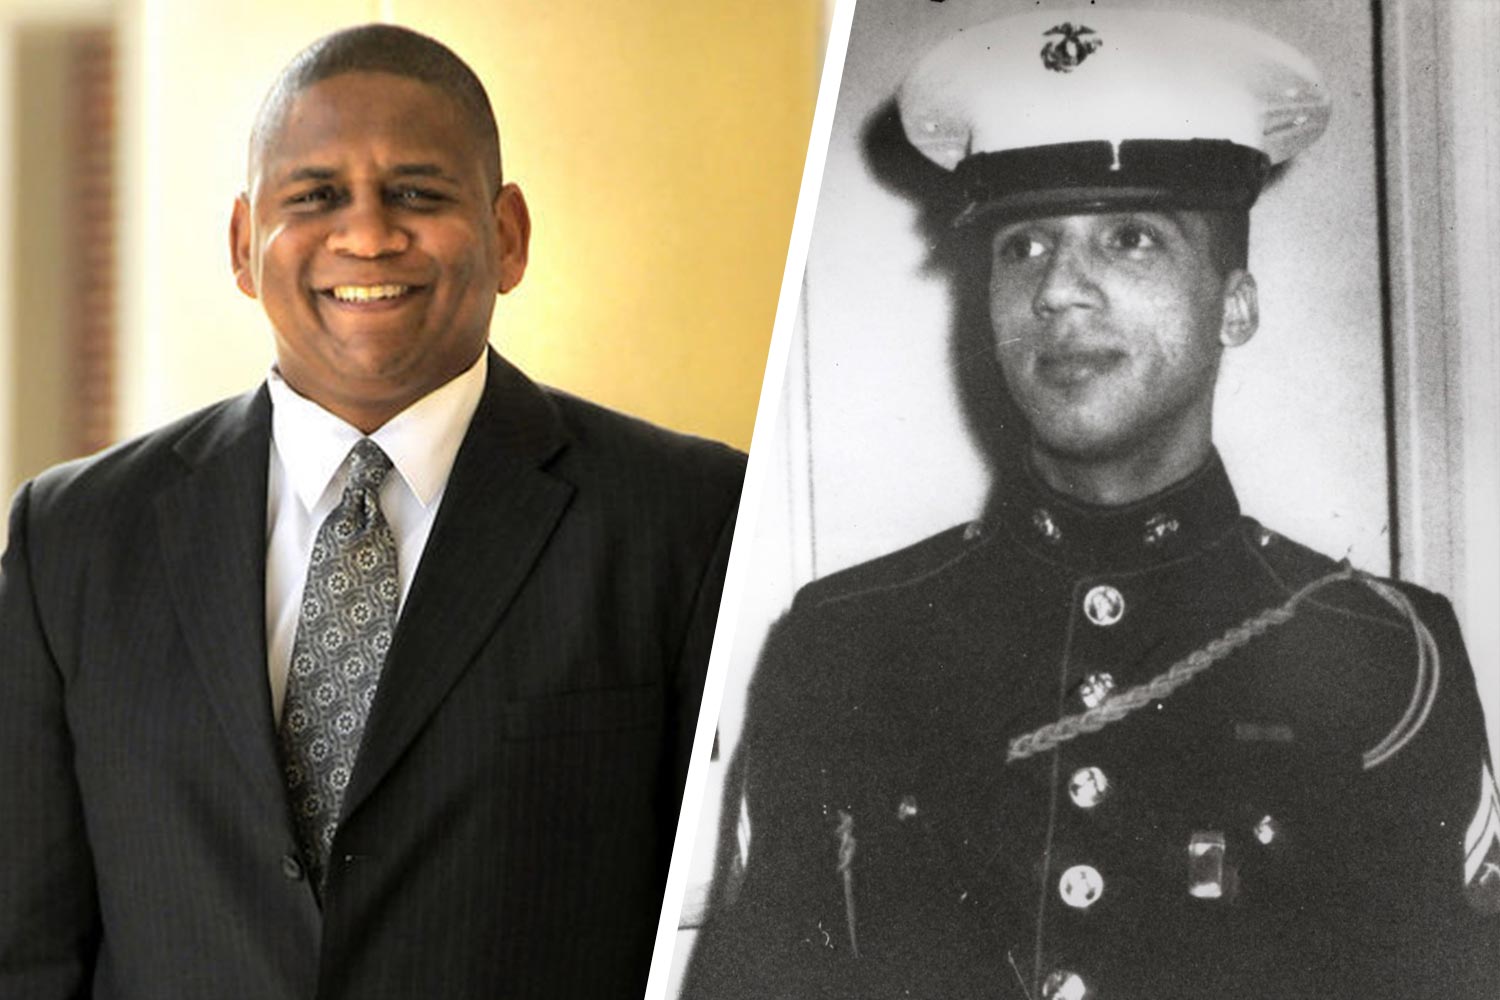 Left: John Hollis headshot. Right: Black and White headshot of U.S. Marine Sgt. Rodney M. Davis